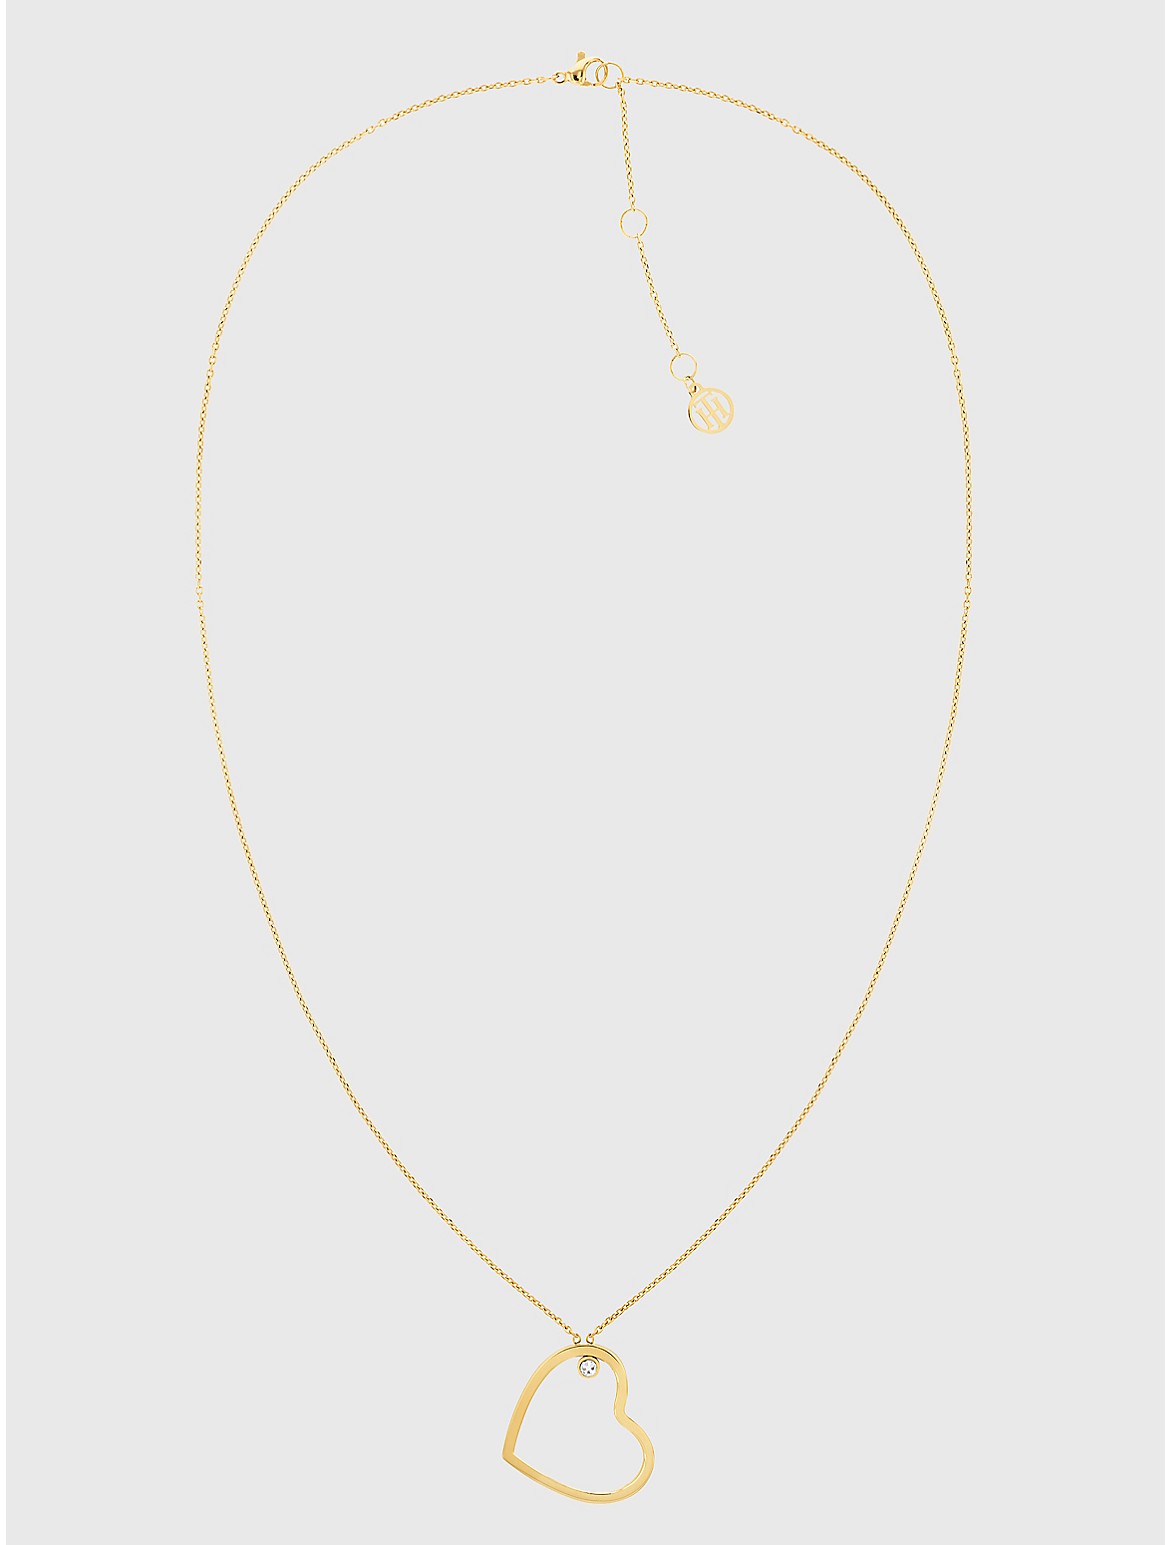 Tommy Hilfiger Women's Gold-Tone Heart Necklace - Metallic